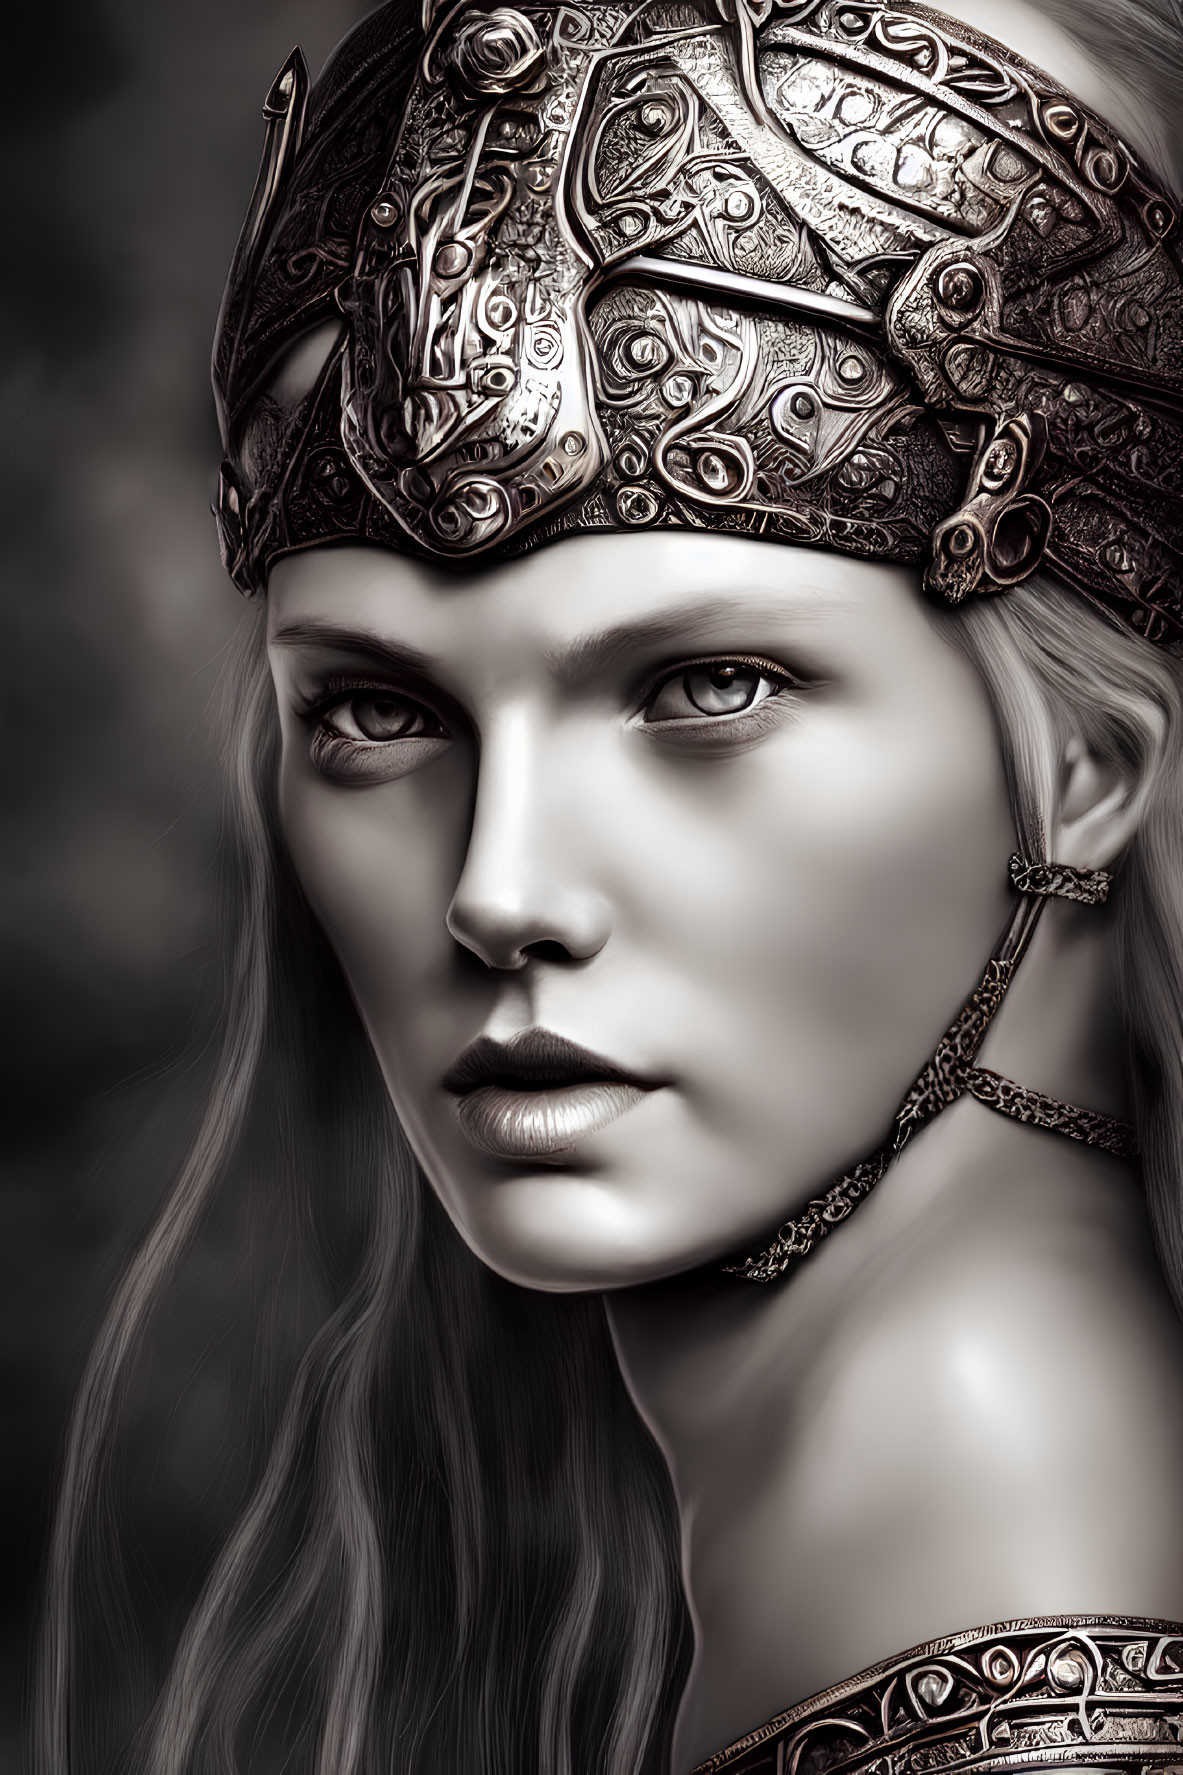 Monochrome portrait of a woman with metallic headgear and ornate jewelry